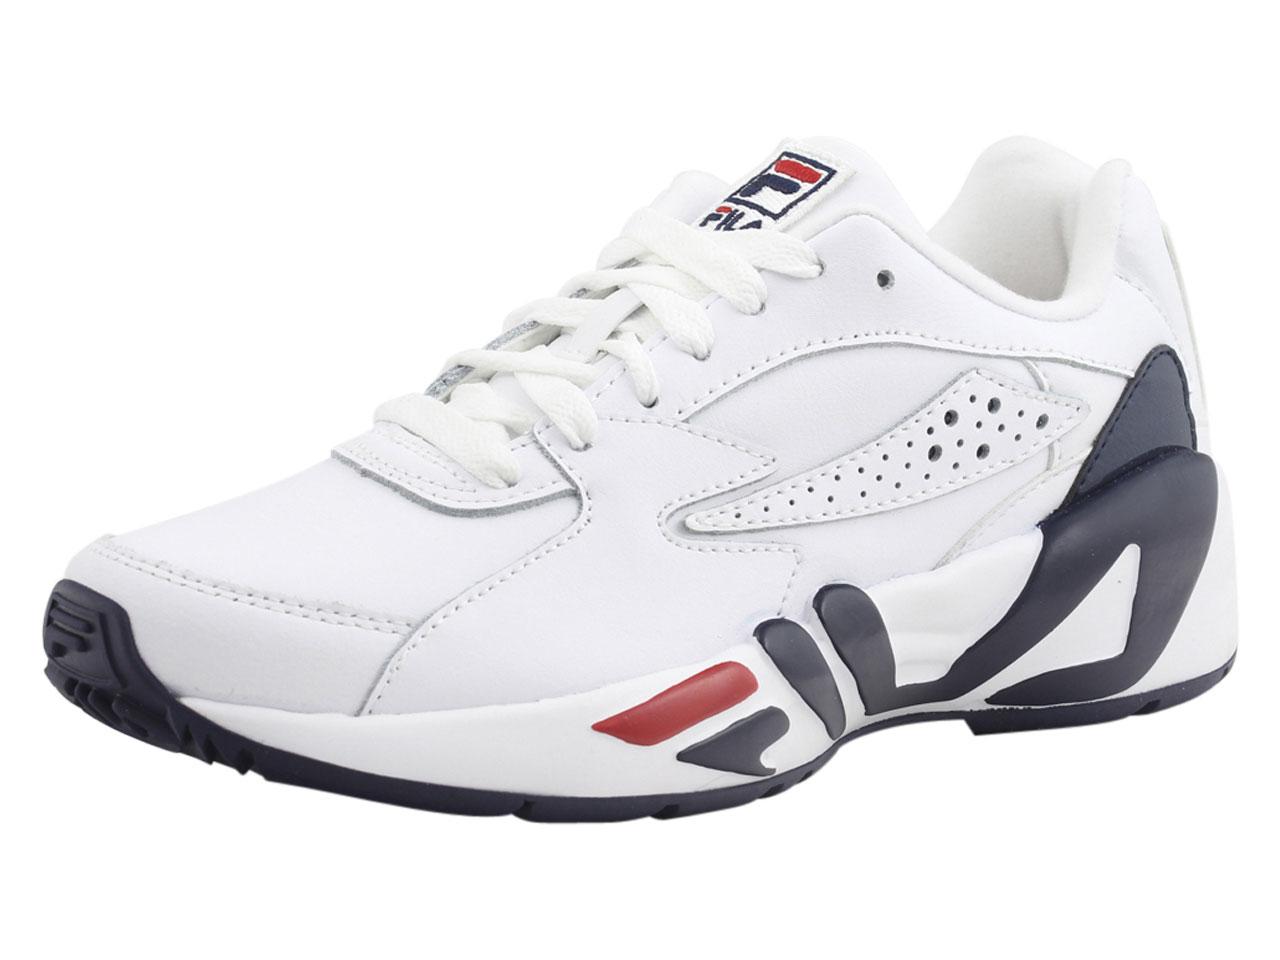 Fila Men's Mindblower Sneakers Shoes - White/Fila Navy/Fila Red Leather - 8 D(M) US